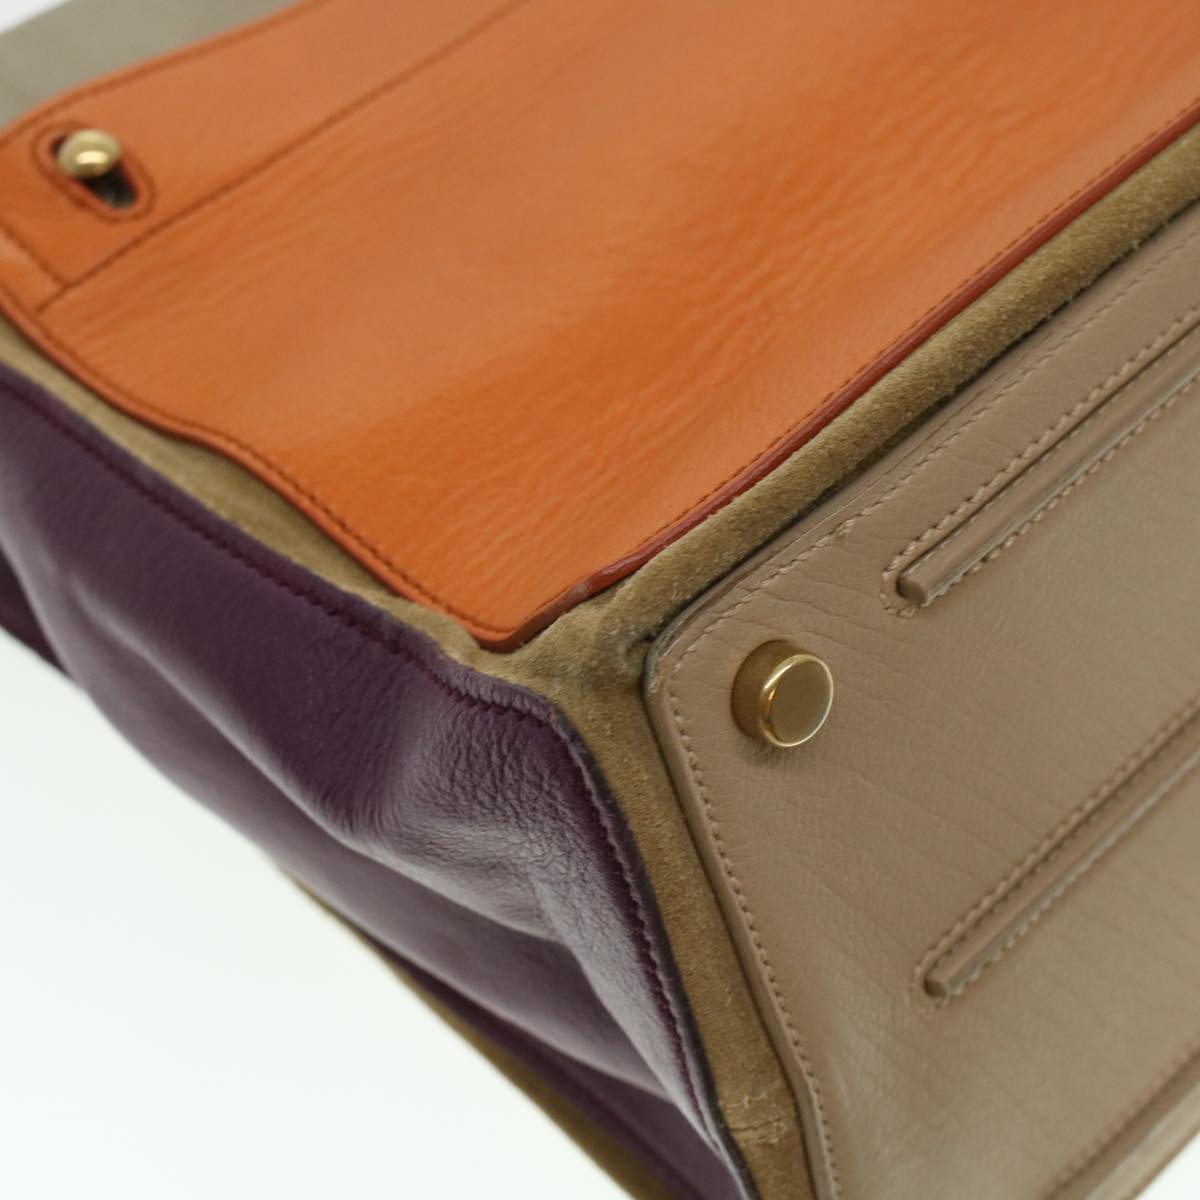 SAINT LAURENT Muse Toe Hand Bag Leather Orange Purple Brown 197149 Auth 43521